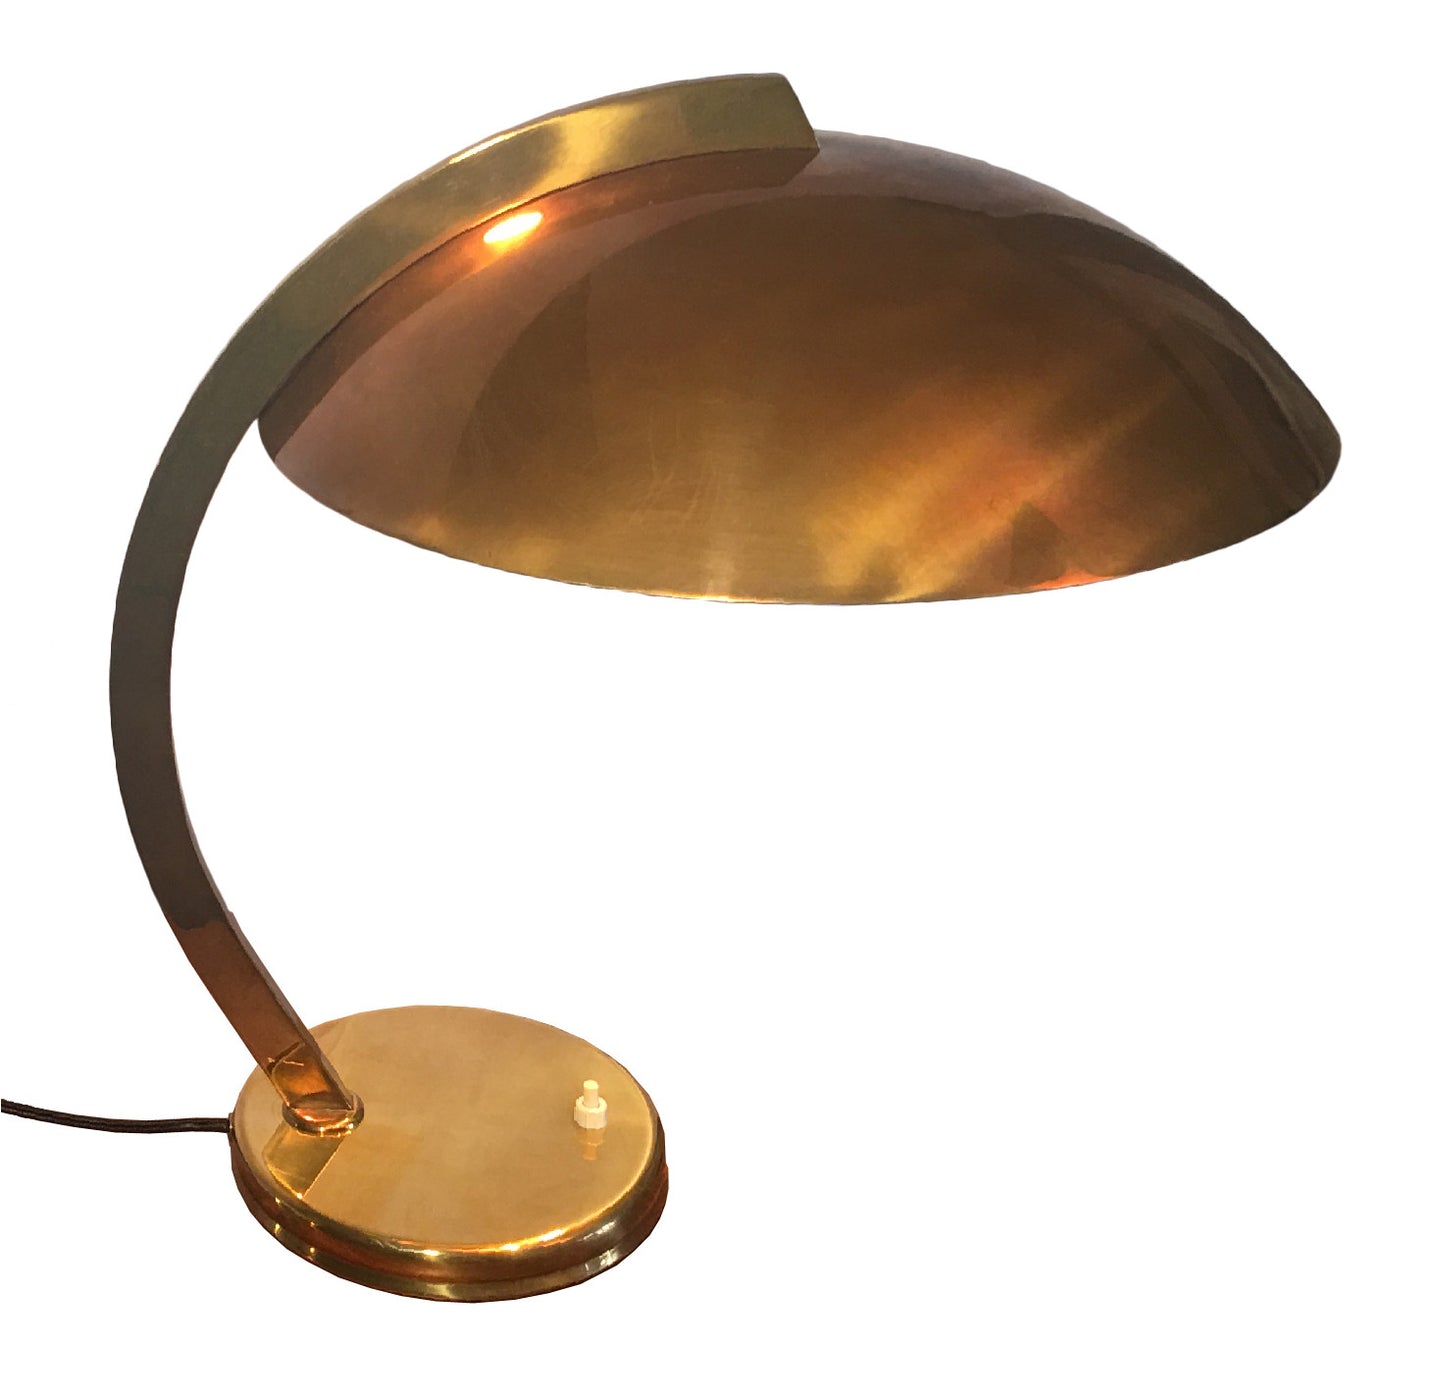 Lampe Art Deco - V comme vintage